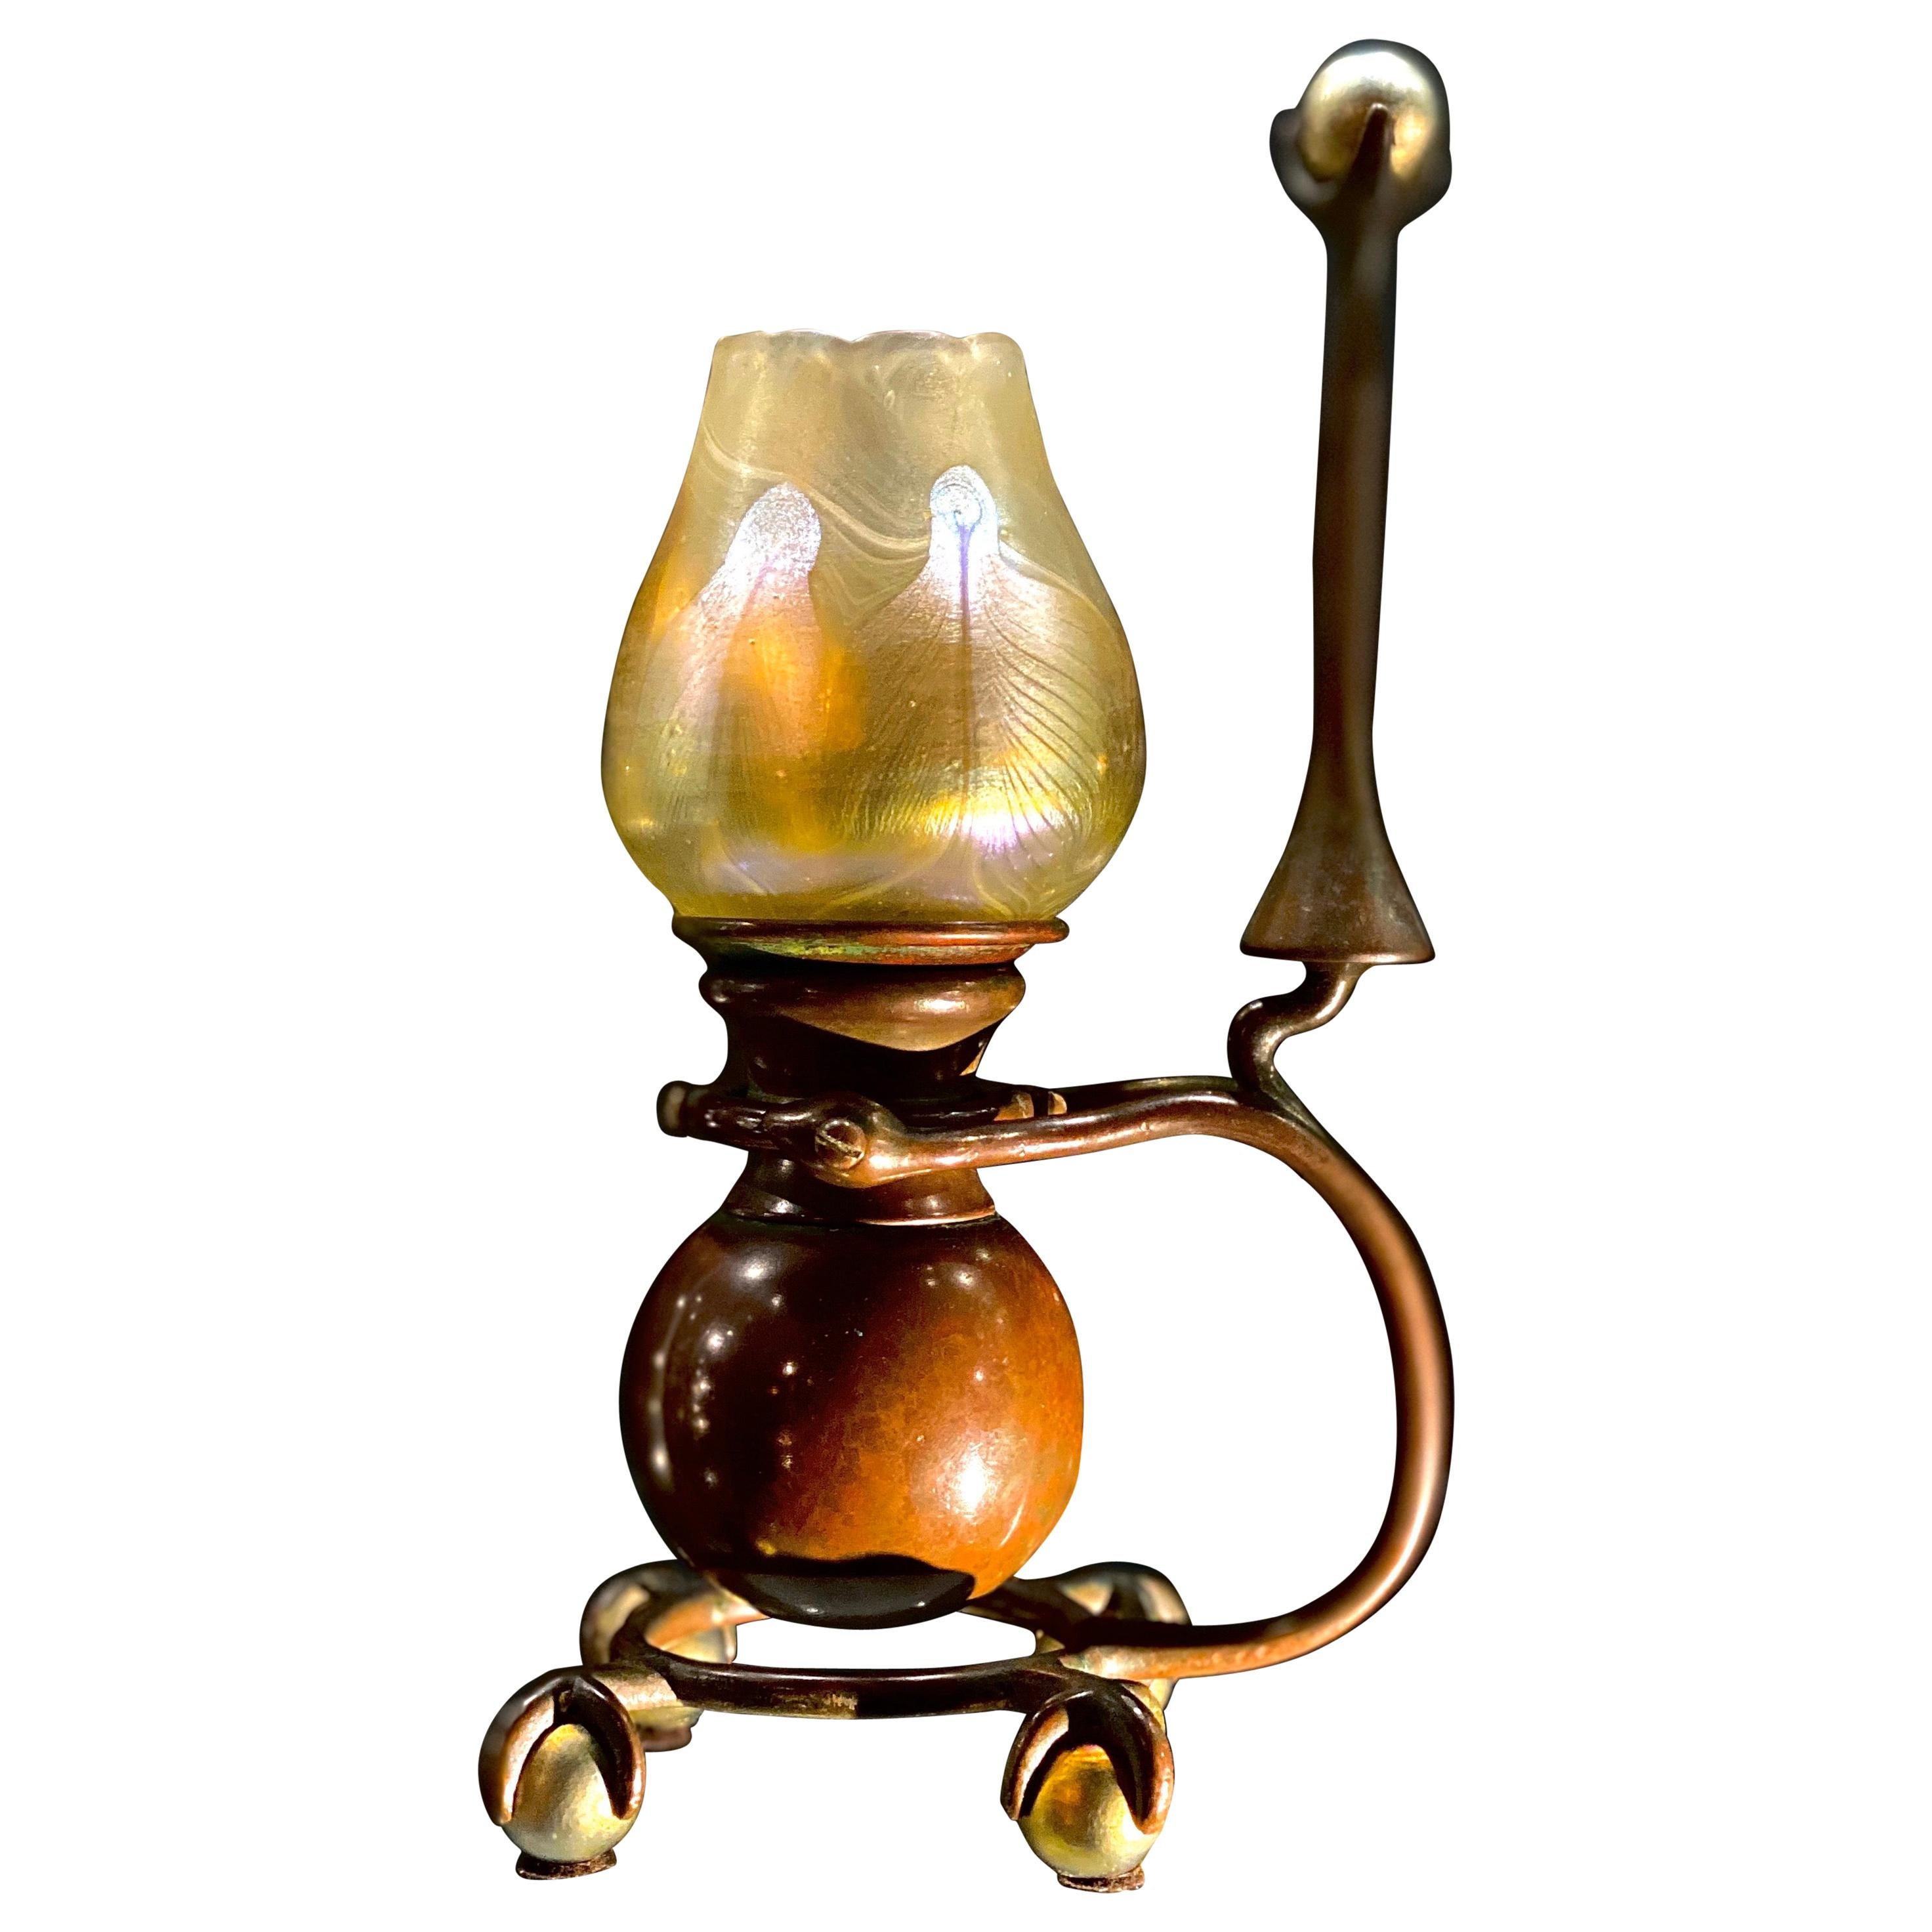 American Art Nouveau “Gimbal” Candlestick by Tiffany Studios